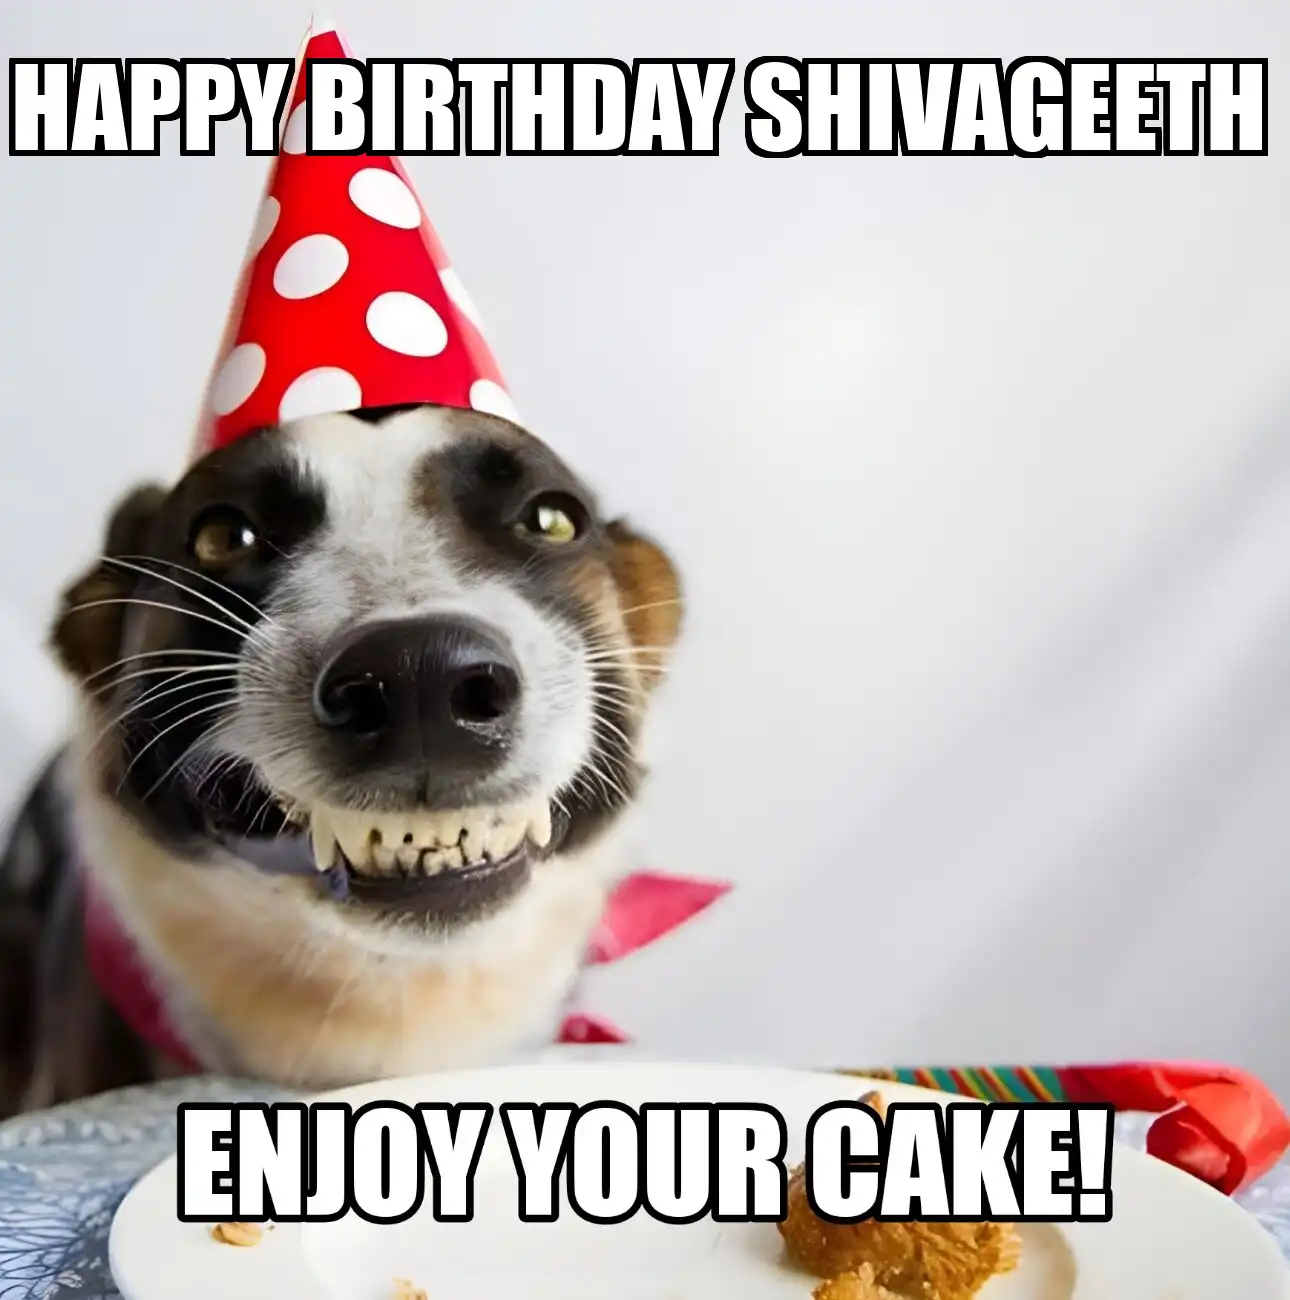 Happy Birthday Shivageeth Enjoy Your Cake Dog Meme